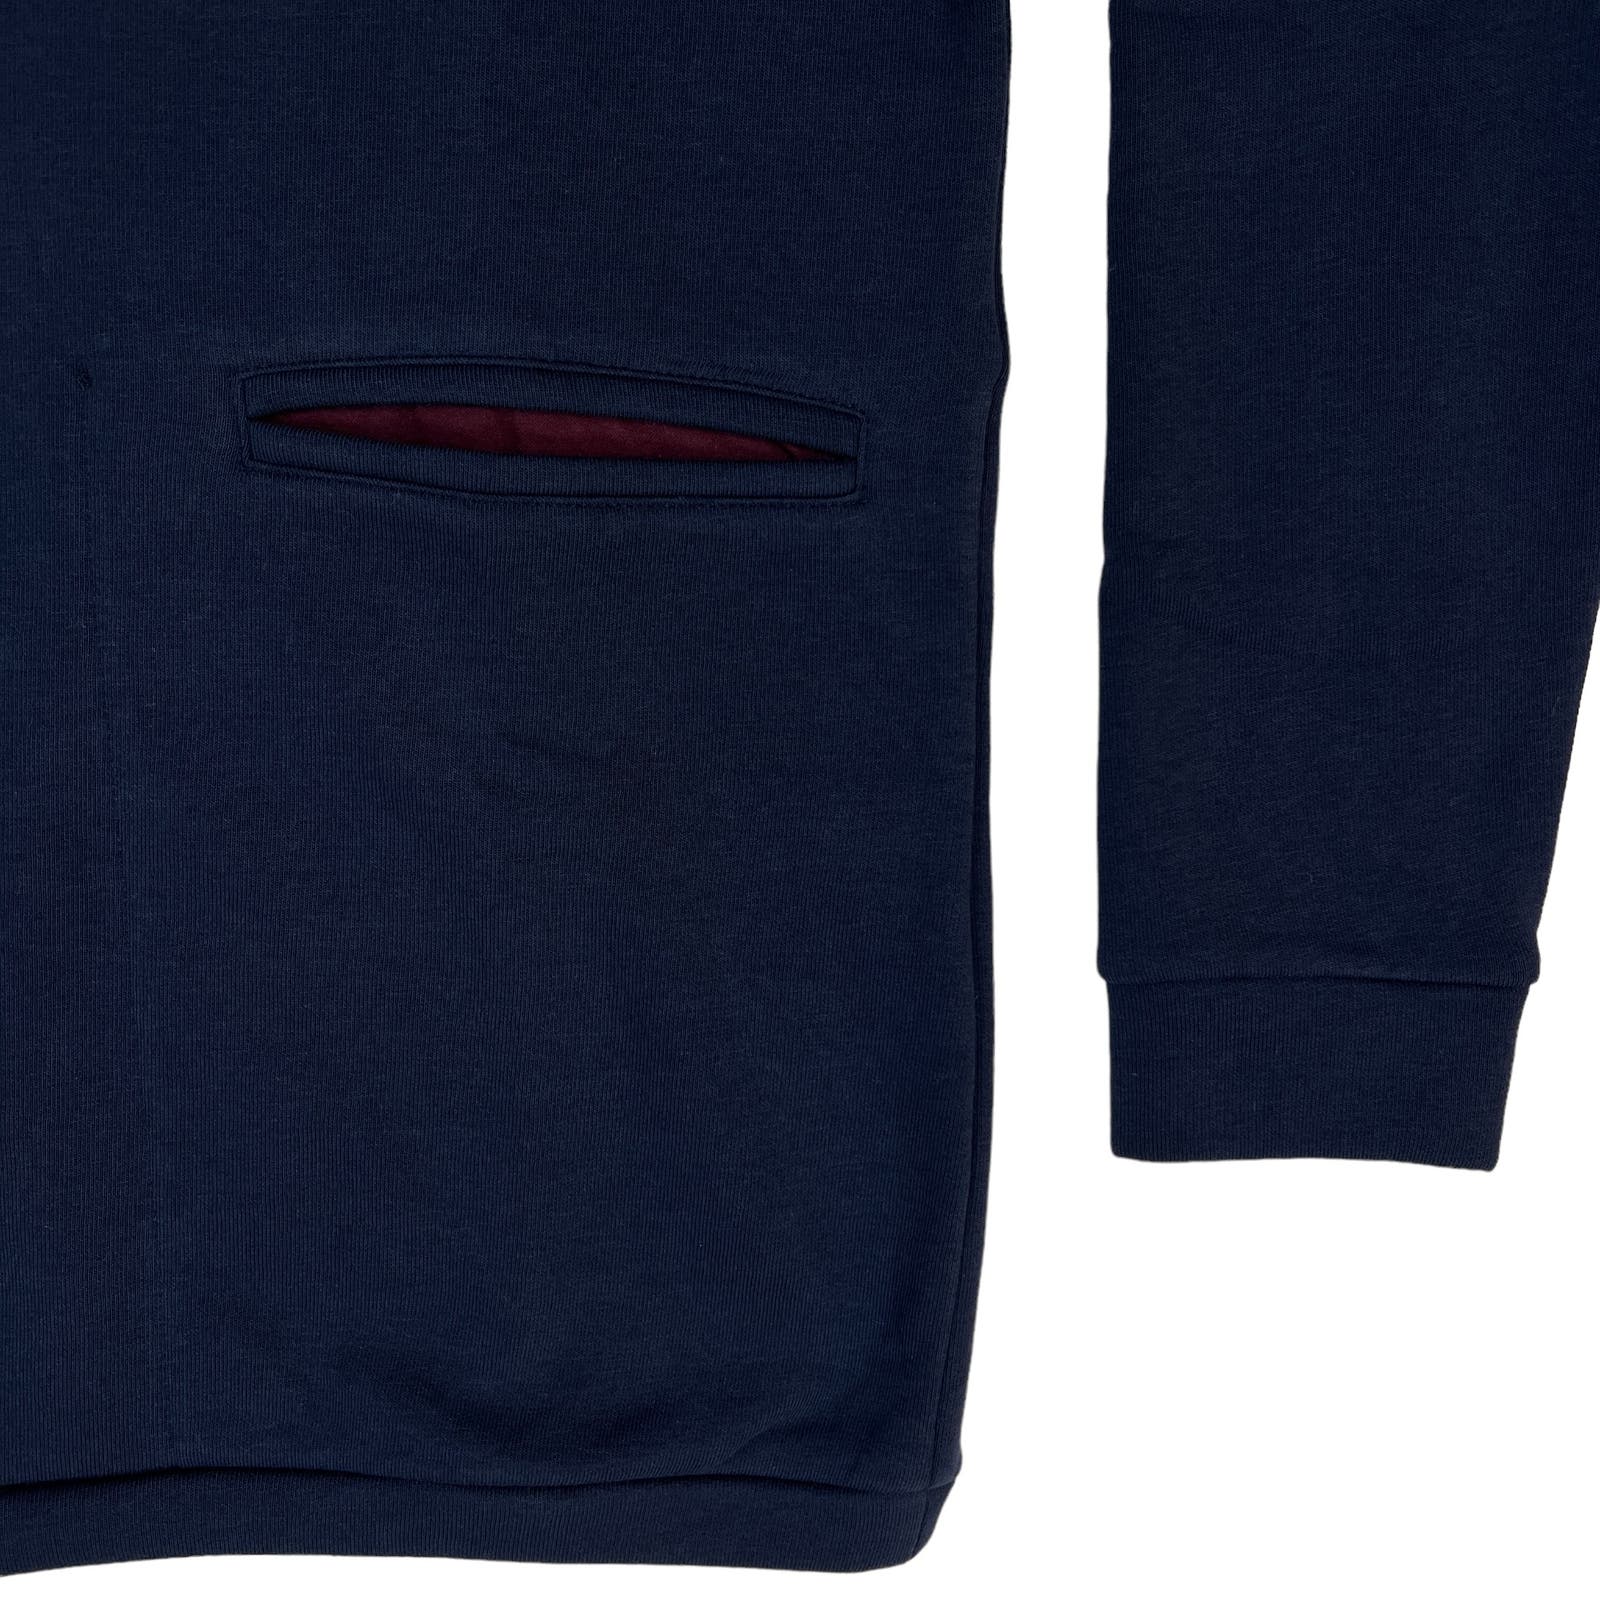 Corelate Men Small Navy Blue Sweatshirt US S Long Cotton Sleeve